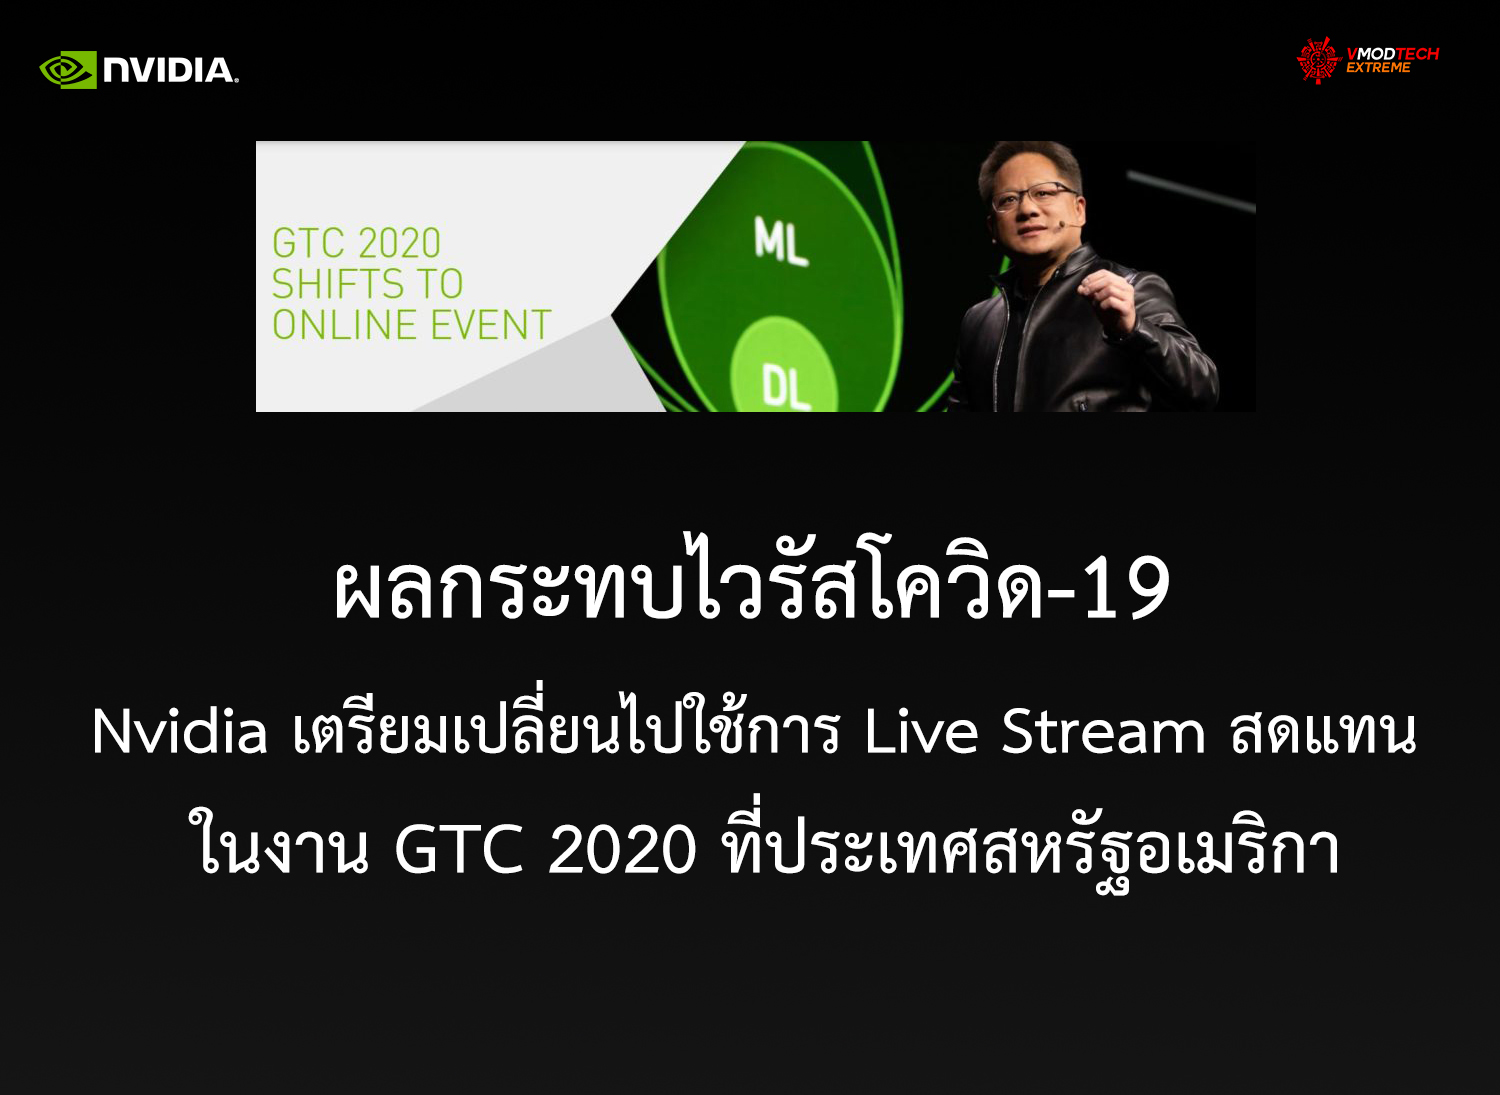 gtc 2020 Nvidia เตรียมเปลี่ยนไปใช้การ Live Stream ในงาน GTC 2020 จากผลกระทบไวรัสโควิด 19